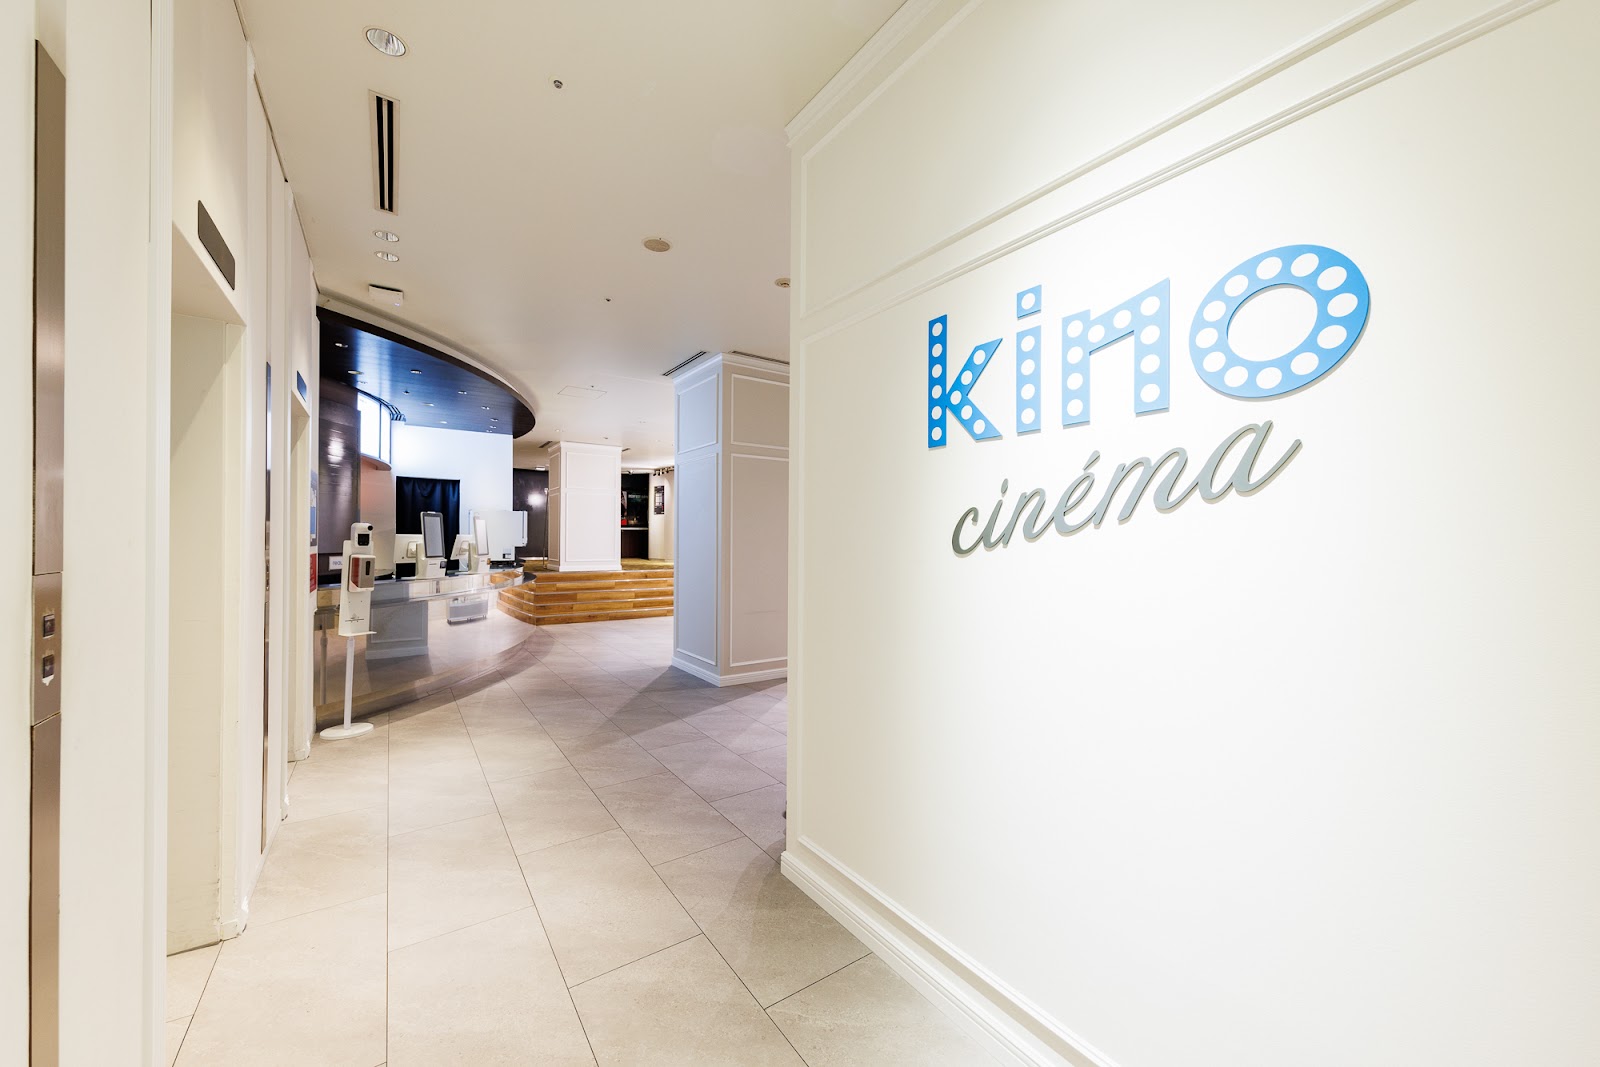 kino cinema新宿にて